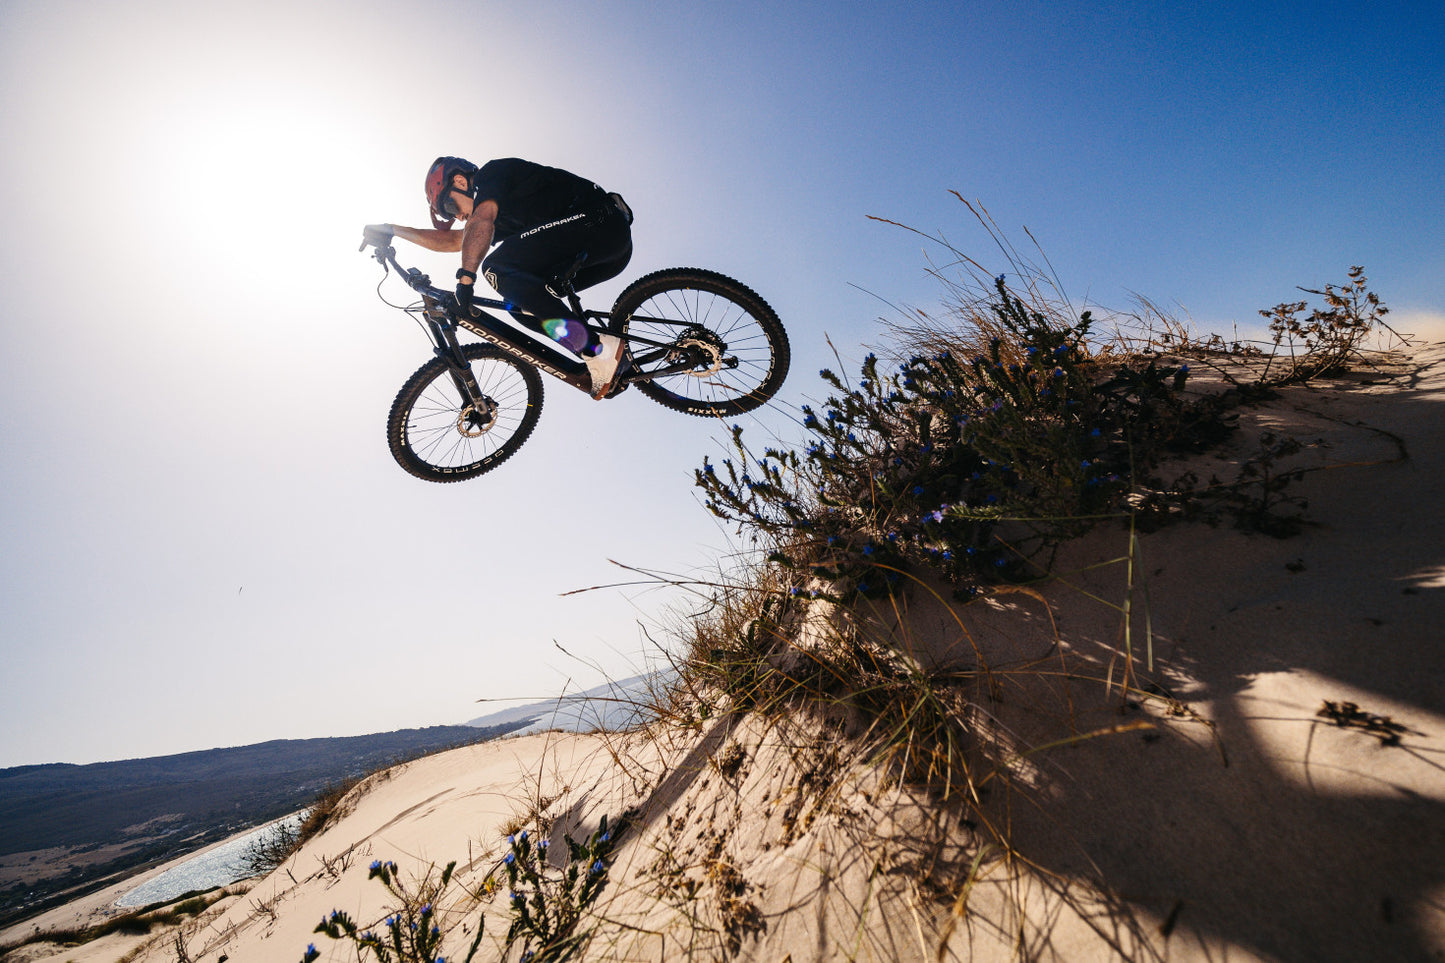 Mondraker Crusher Man rider getting air, jumping sandy hill